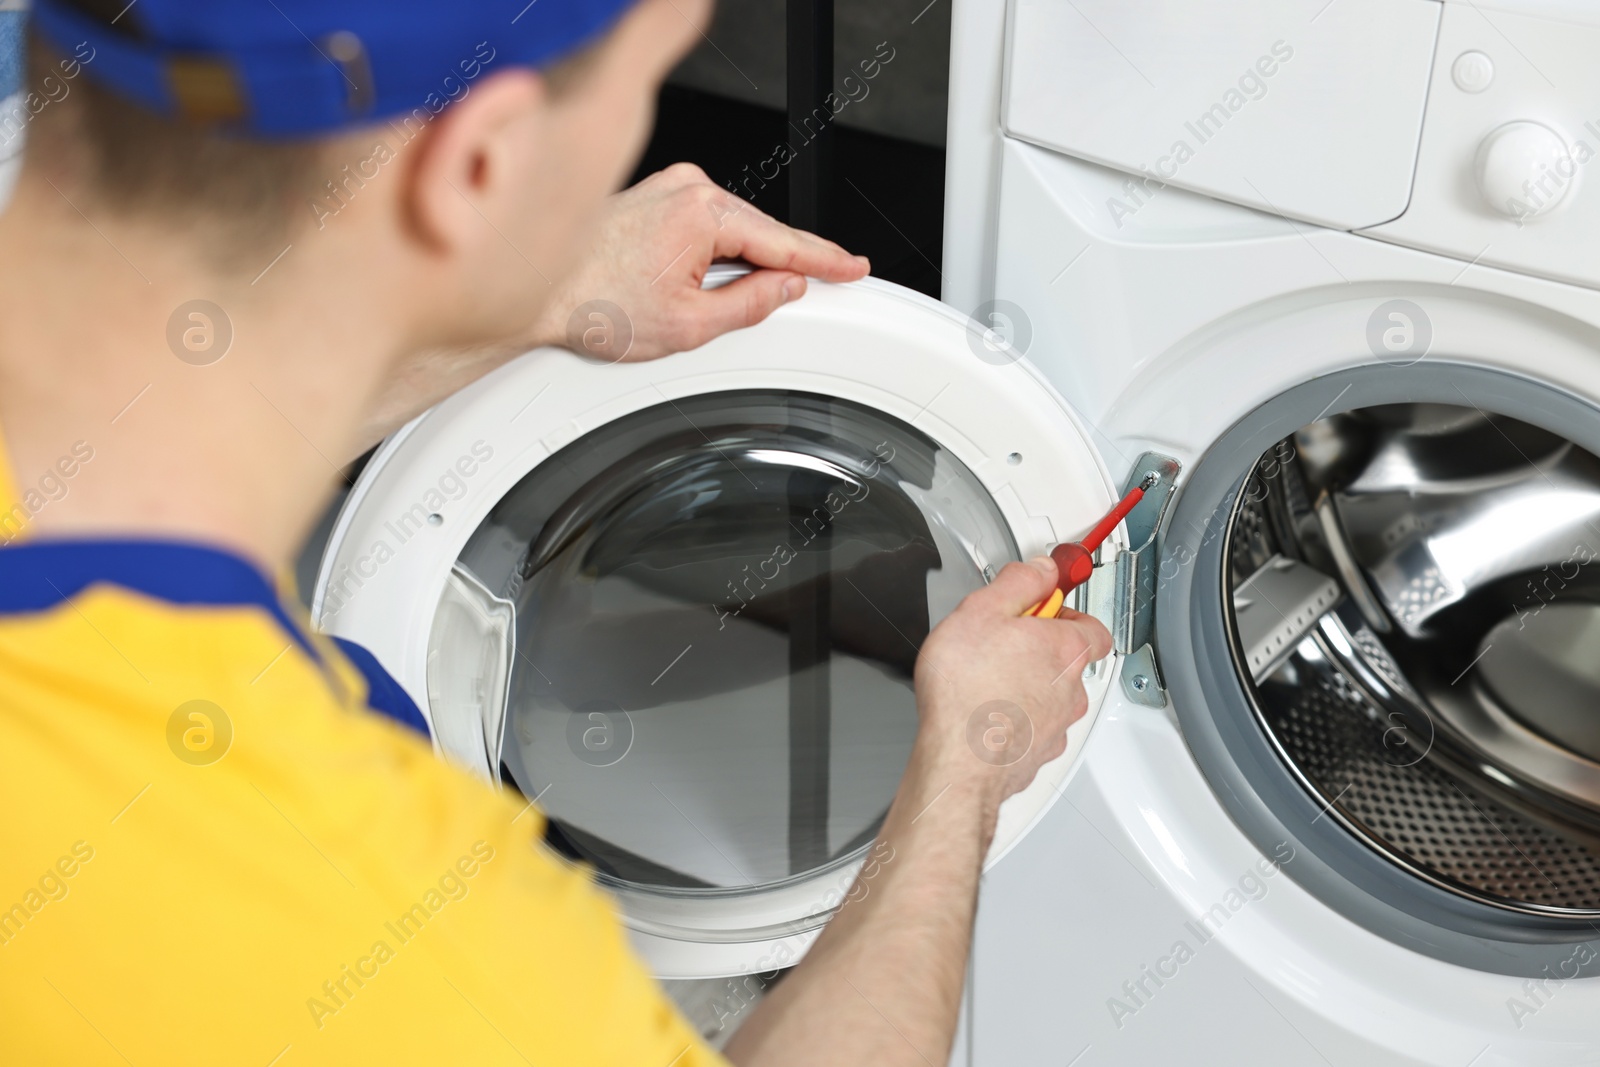 Photo of Plumber repairing washing machine with screwdriver indoors, closeup